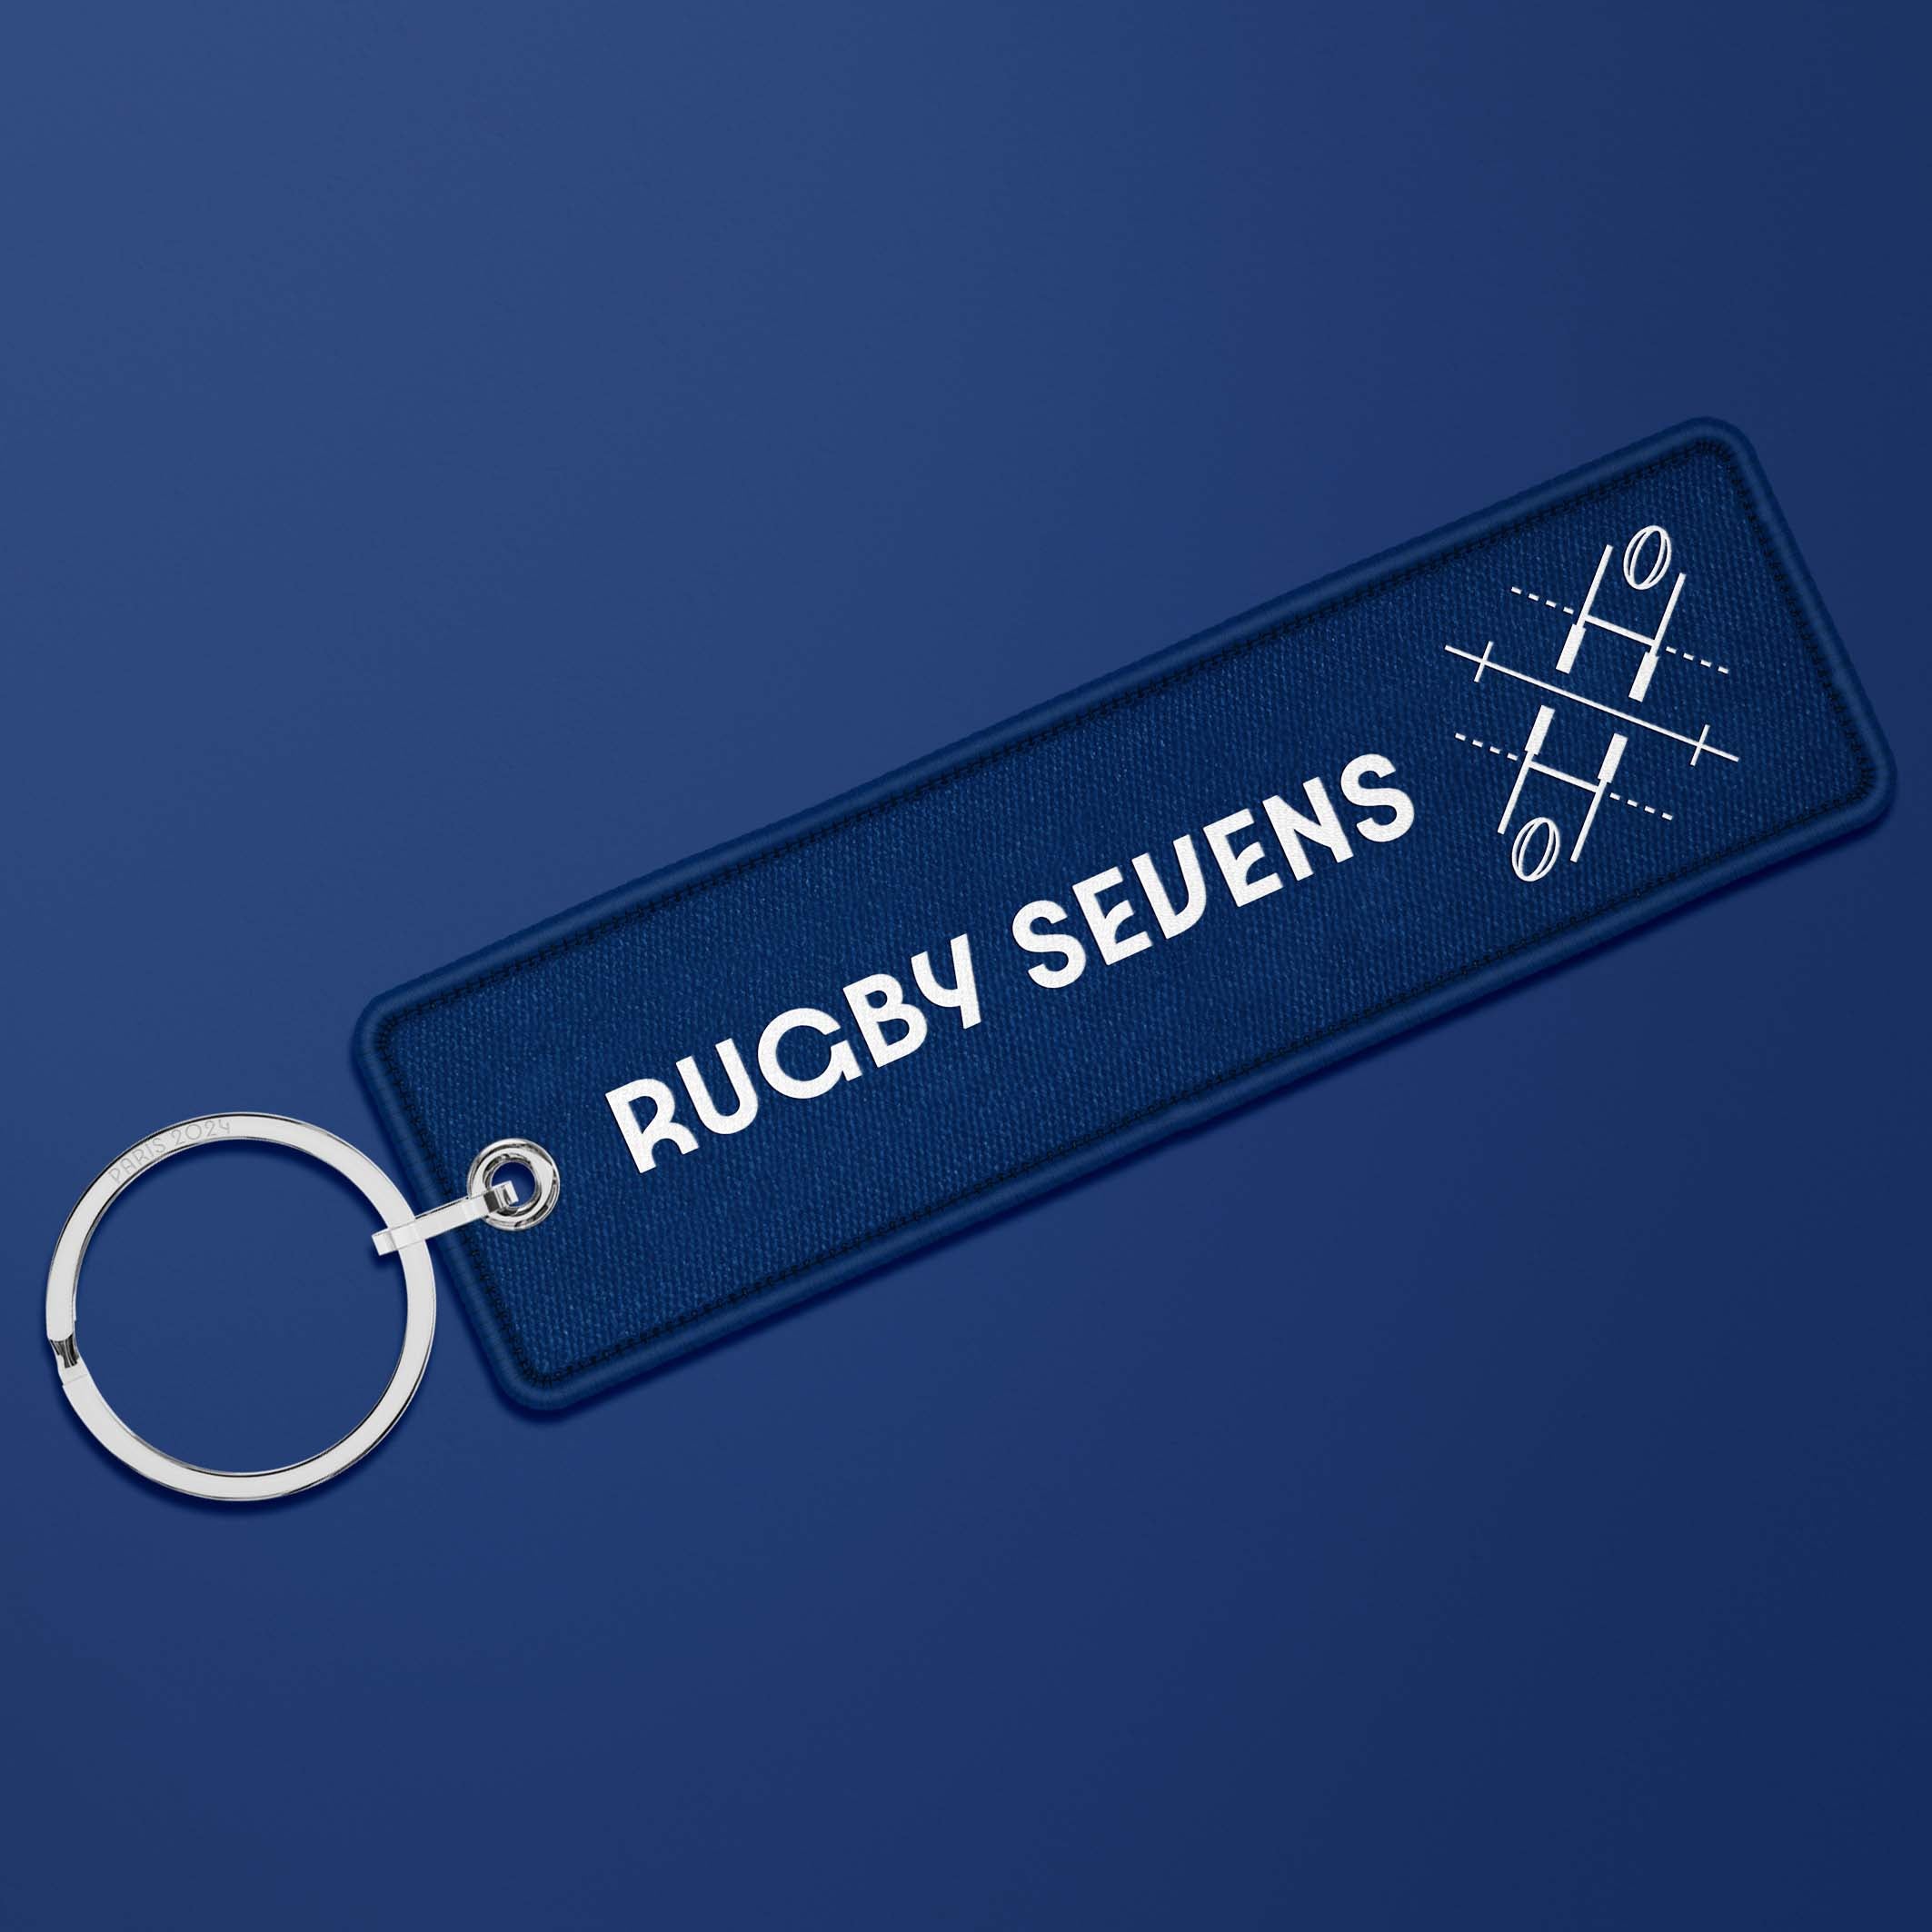 Porte-clés flamme Paris 2024 French blue - 7th Rugby